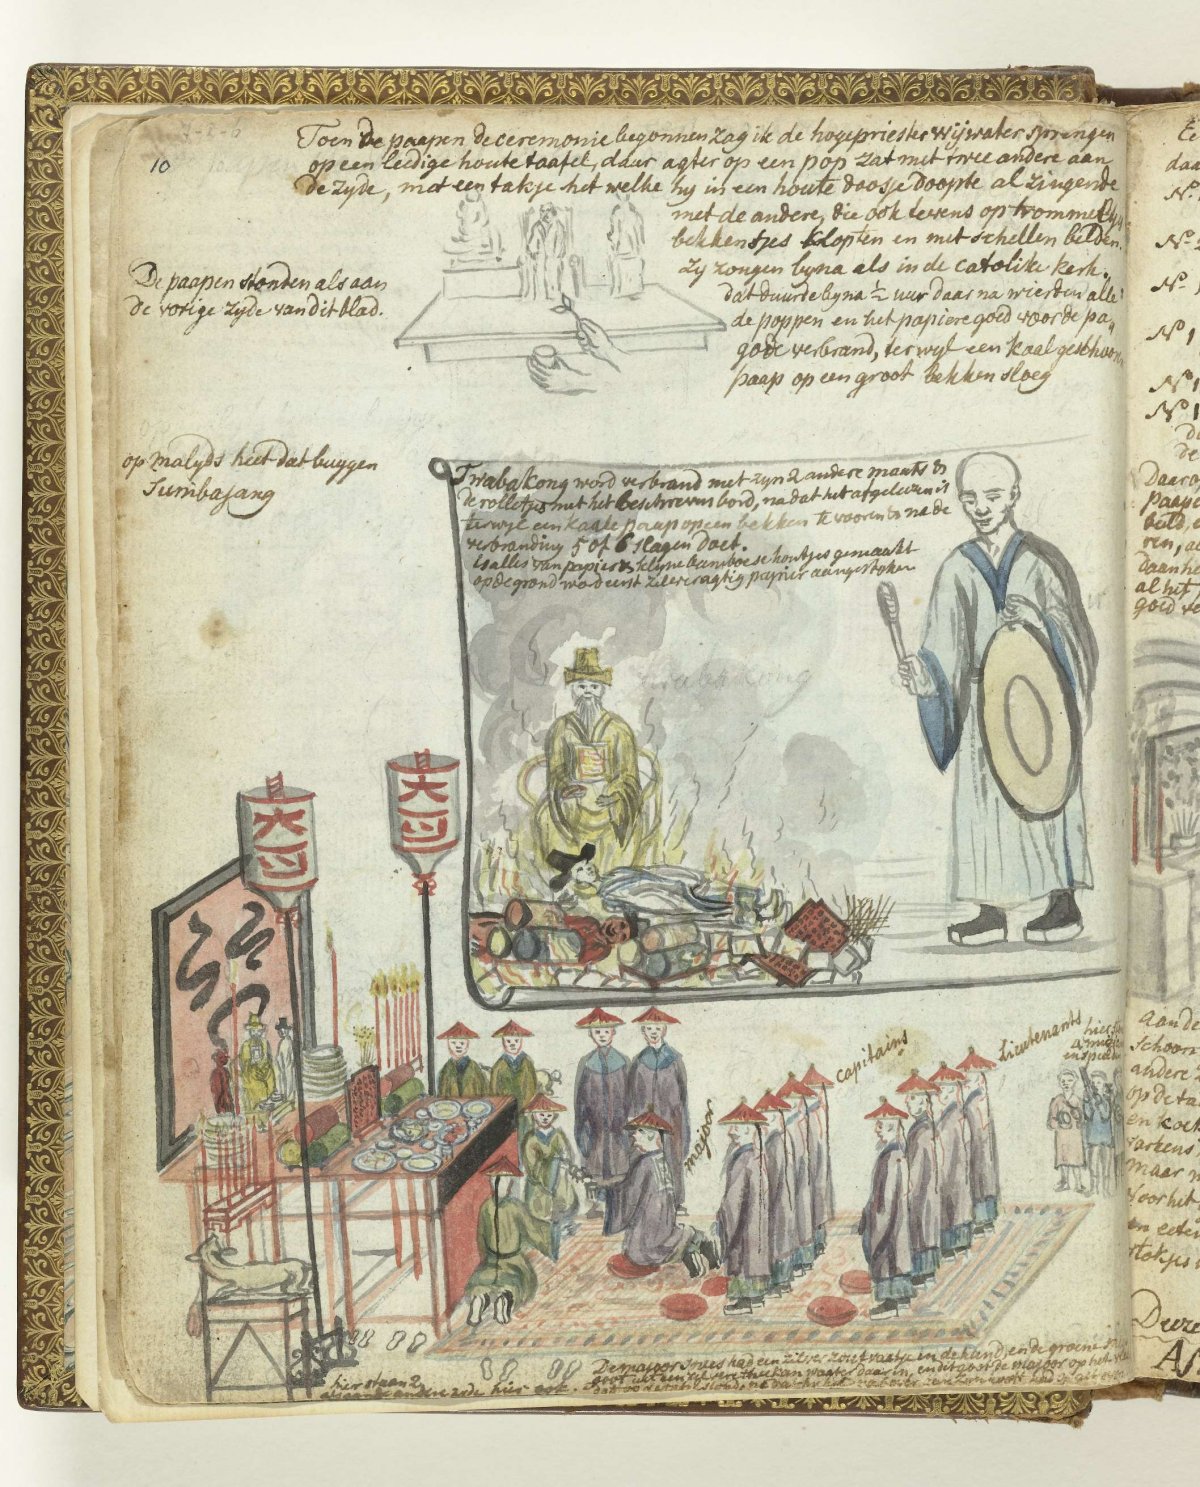 Chinese sacrificial ceremony in Batavia, Jan Brandes, 1779 - 1785